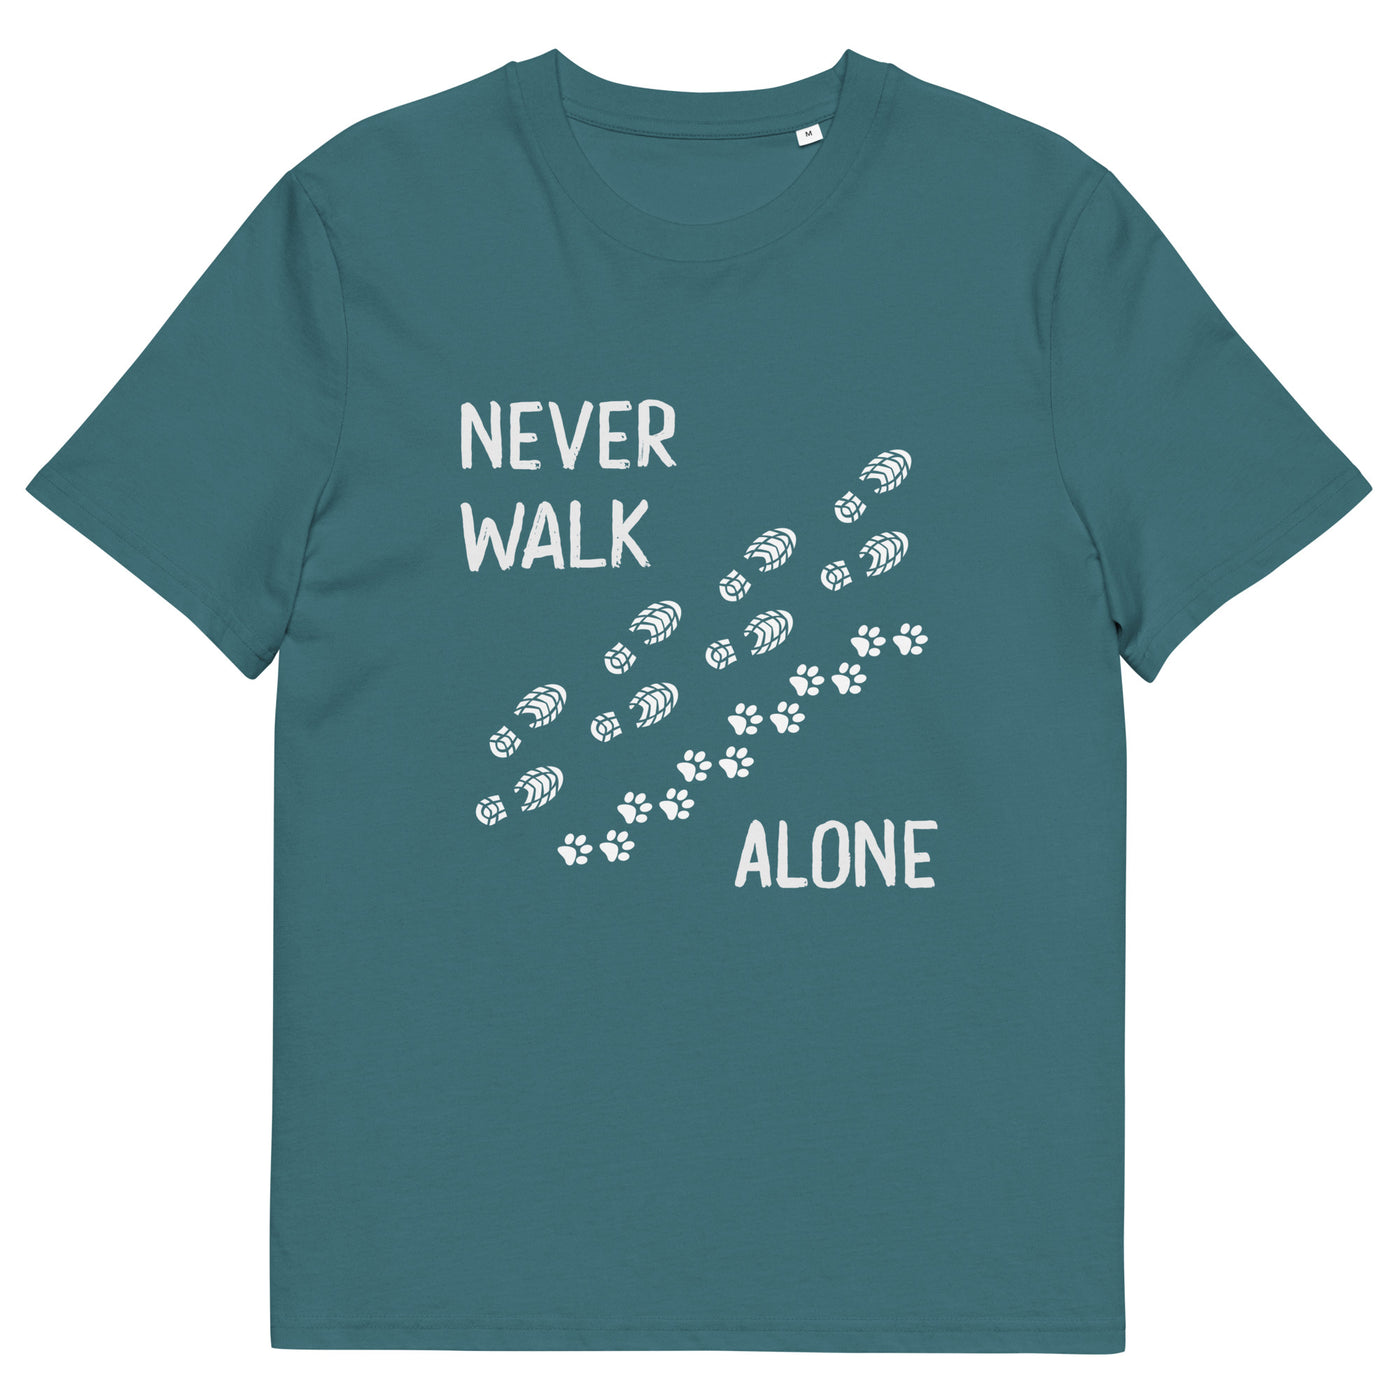 Never walk alone - Herren Premium Organic T-Shirt wandern xxx yyy zzz Stargazer